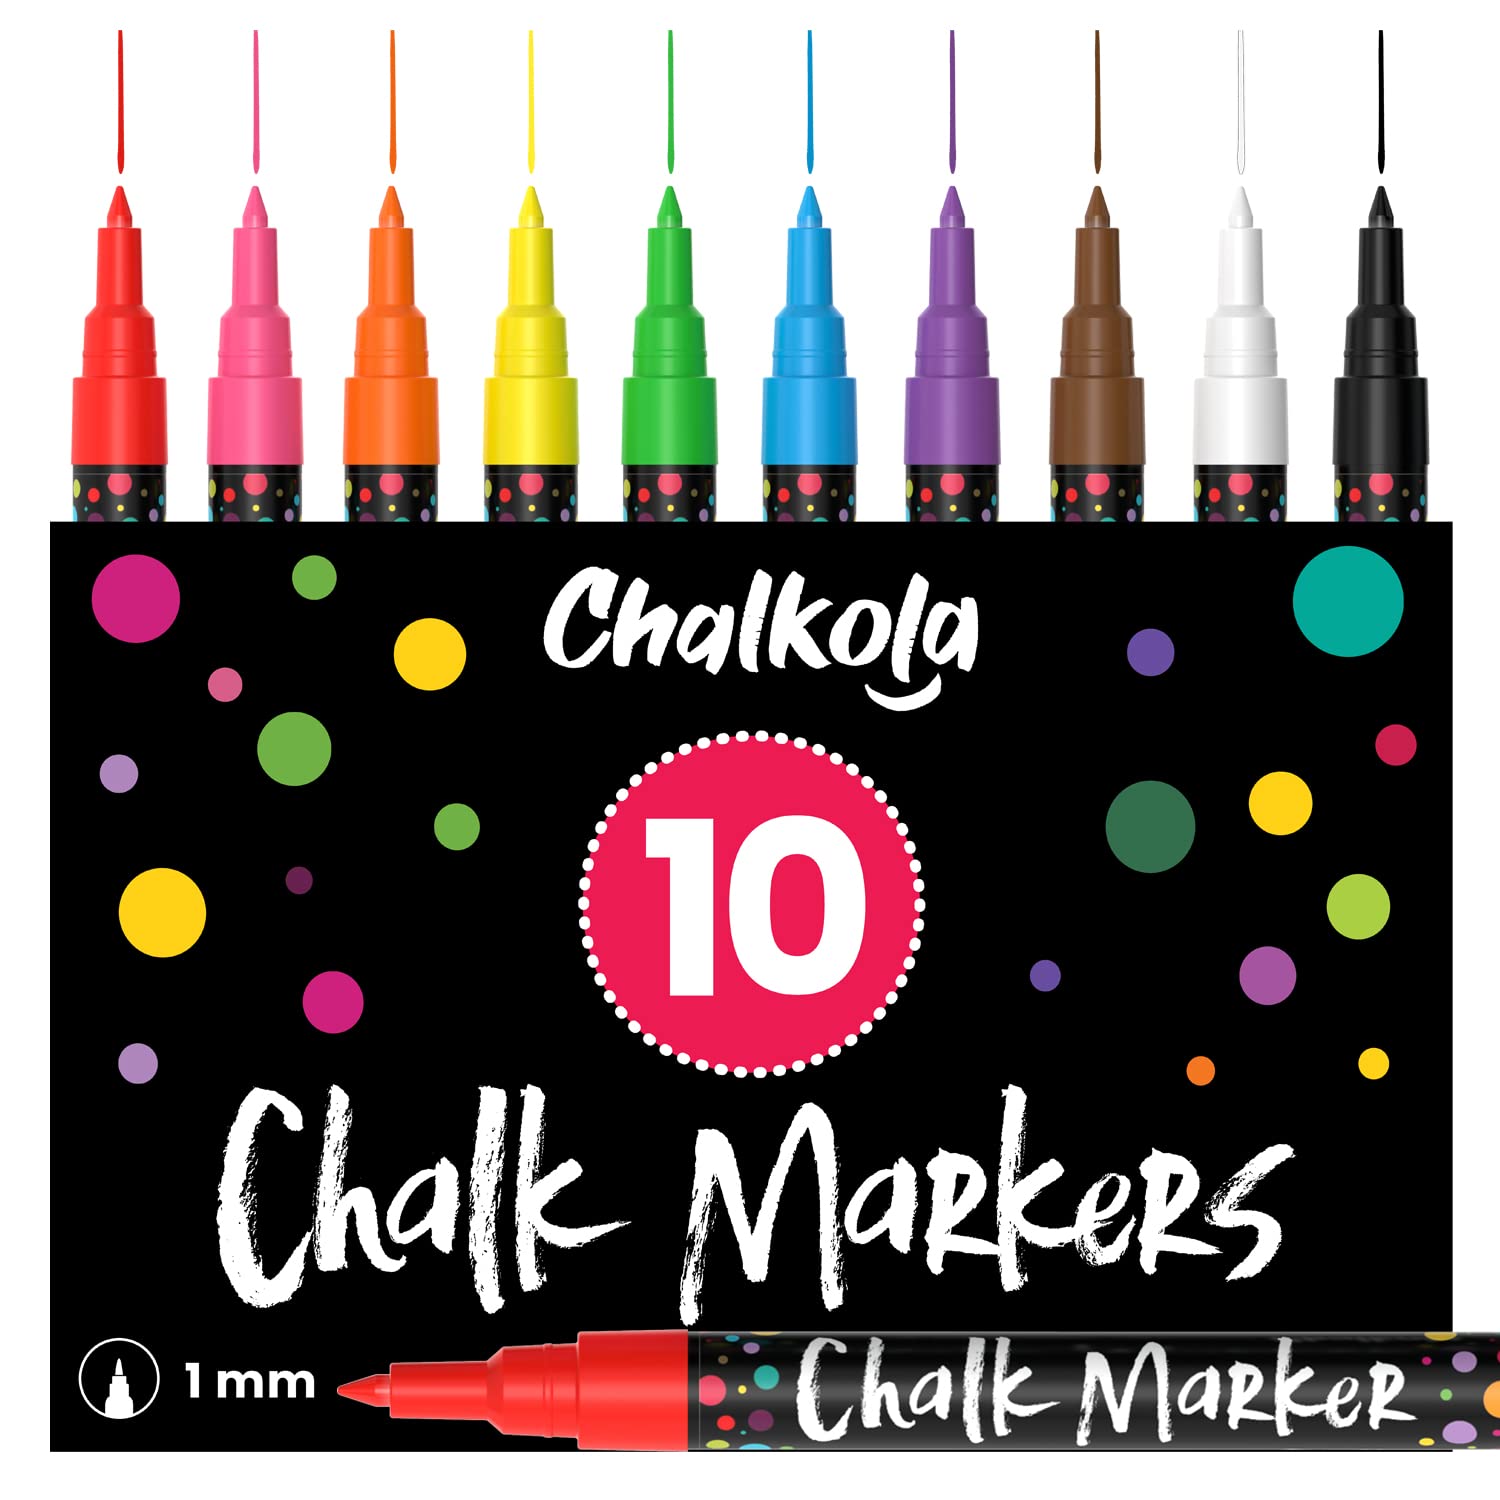 Chalkola White Chalk Markers for Blackboard, Chalkboard Sign, Window,  Bistro, Car, Glass (5 Pack 6mm) - Liquid Chalkboard Markers Erasable -  Paint